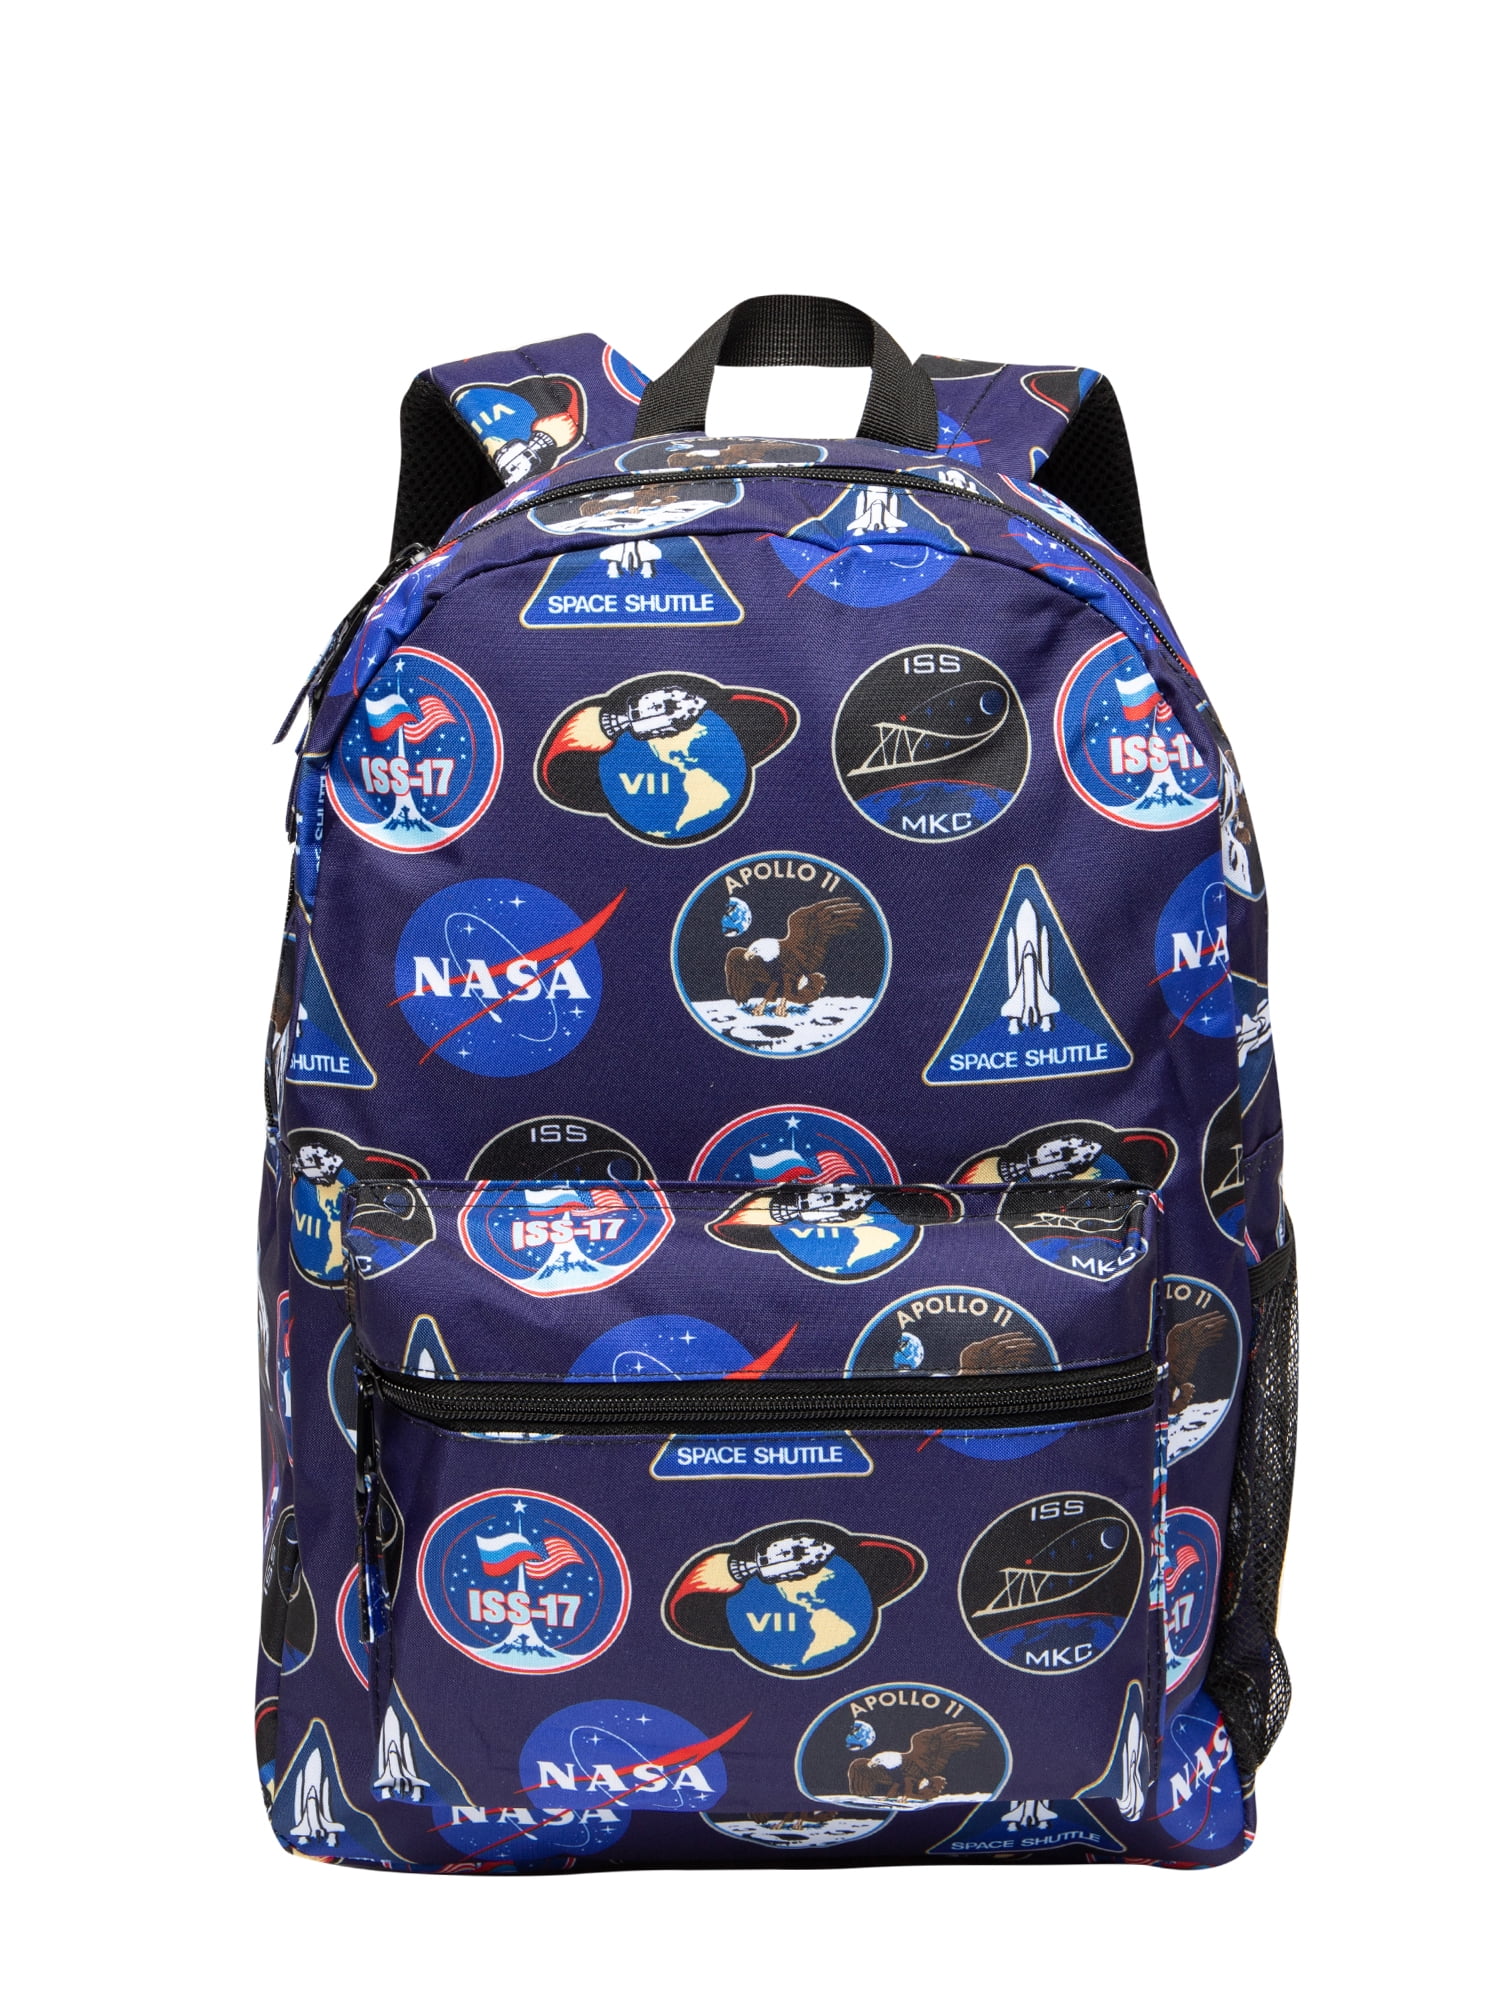 NASA Unisex Student Backpack All Over Print Black 